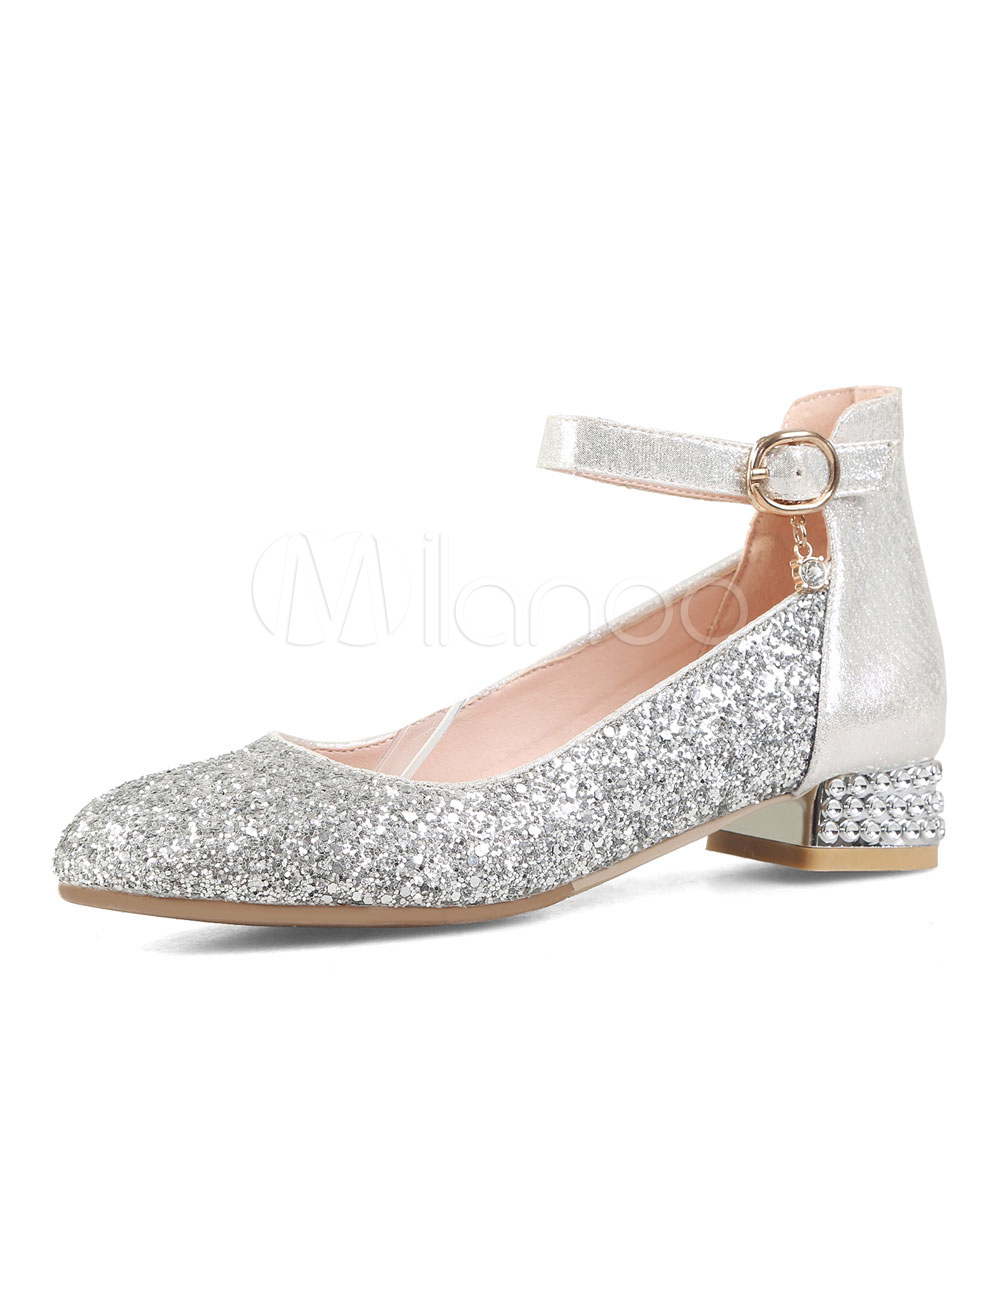 silver round toe heels